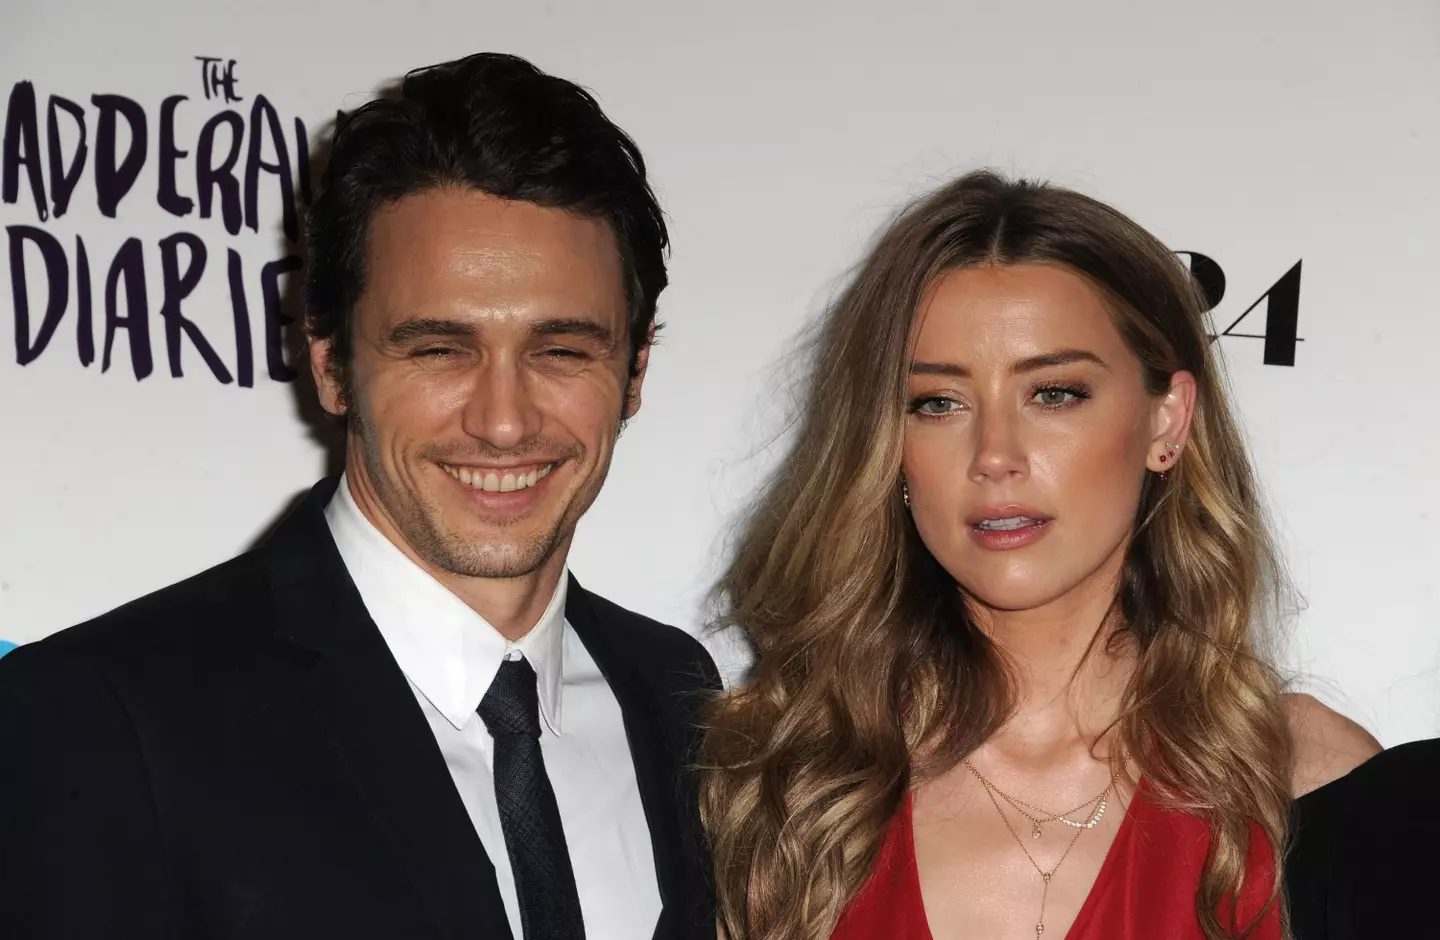 Amber Heard has claimed Johnny Depp 'hated' James Franco.